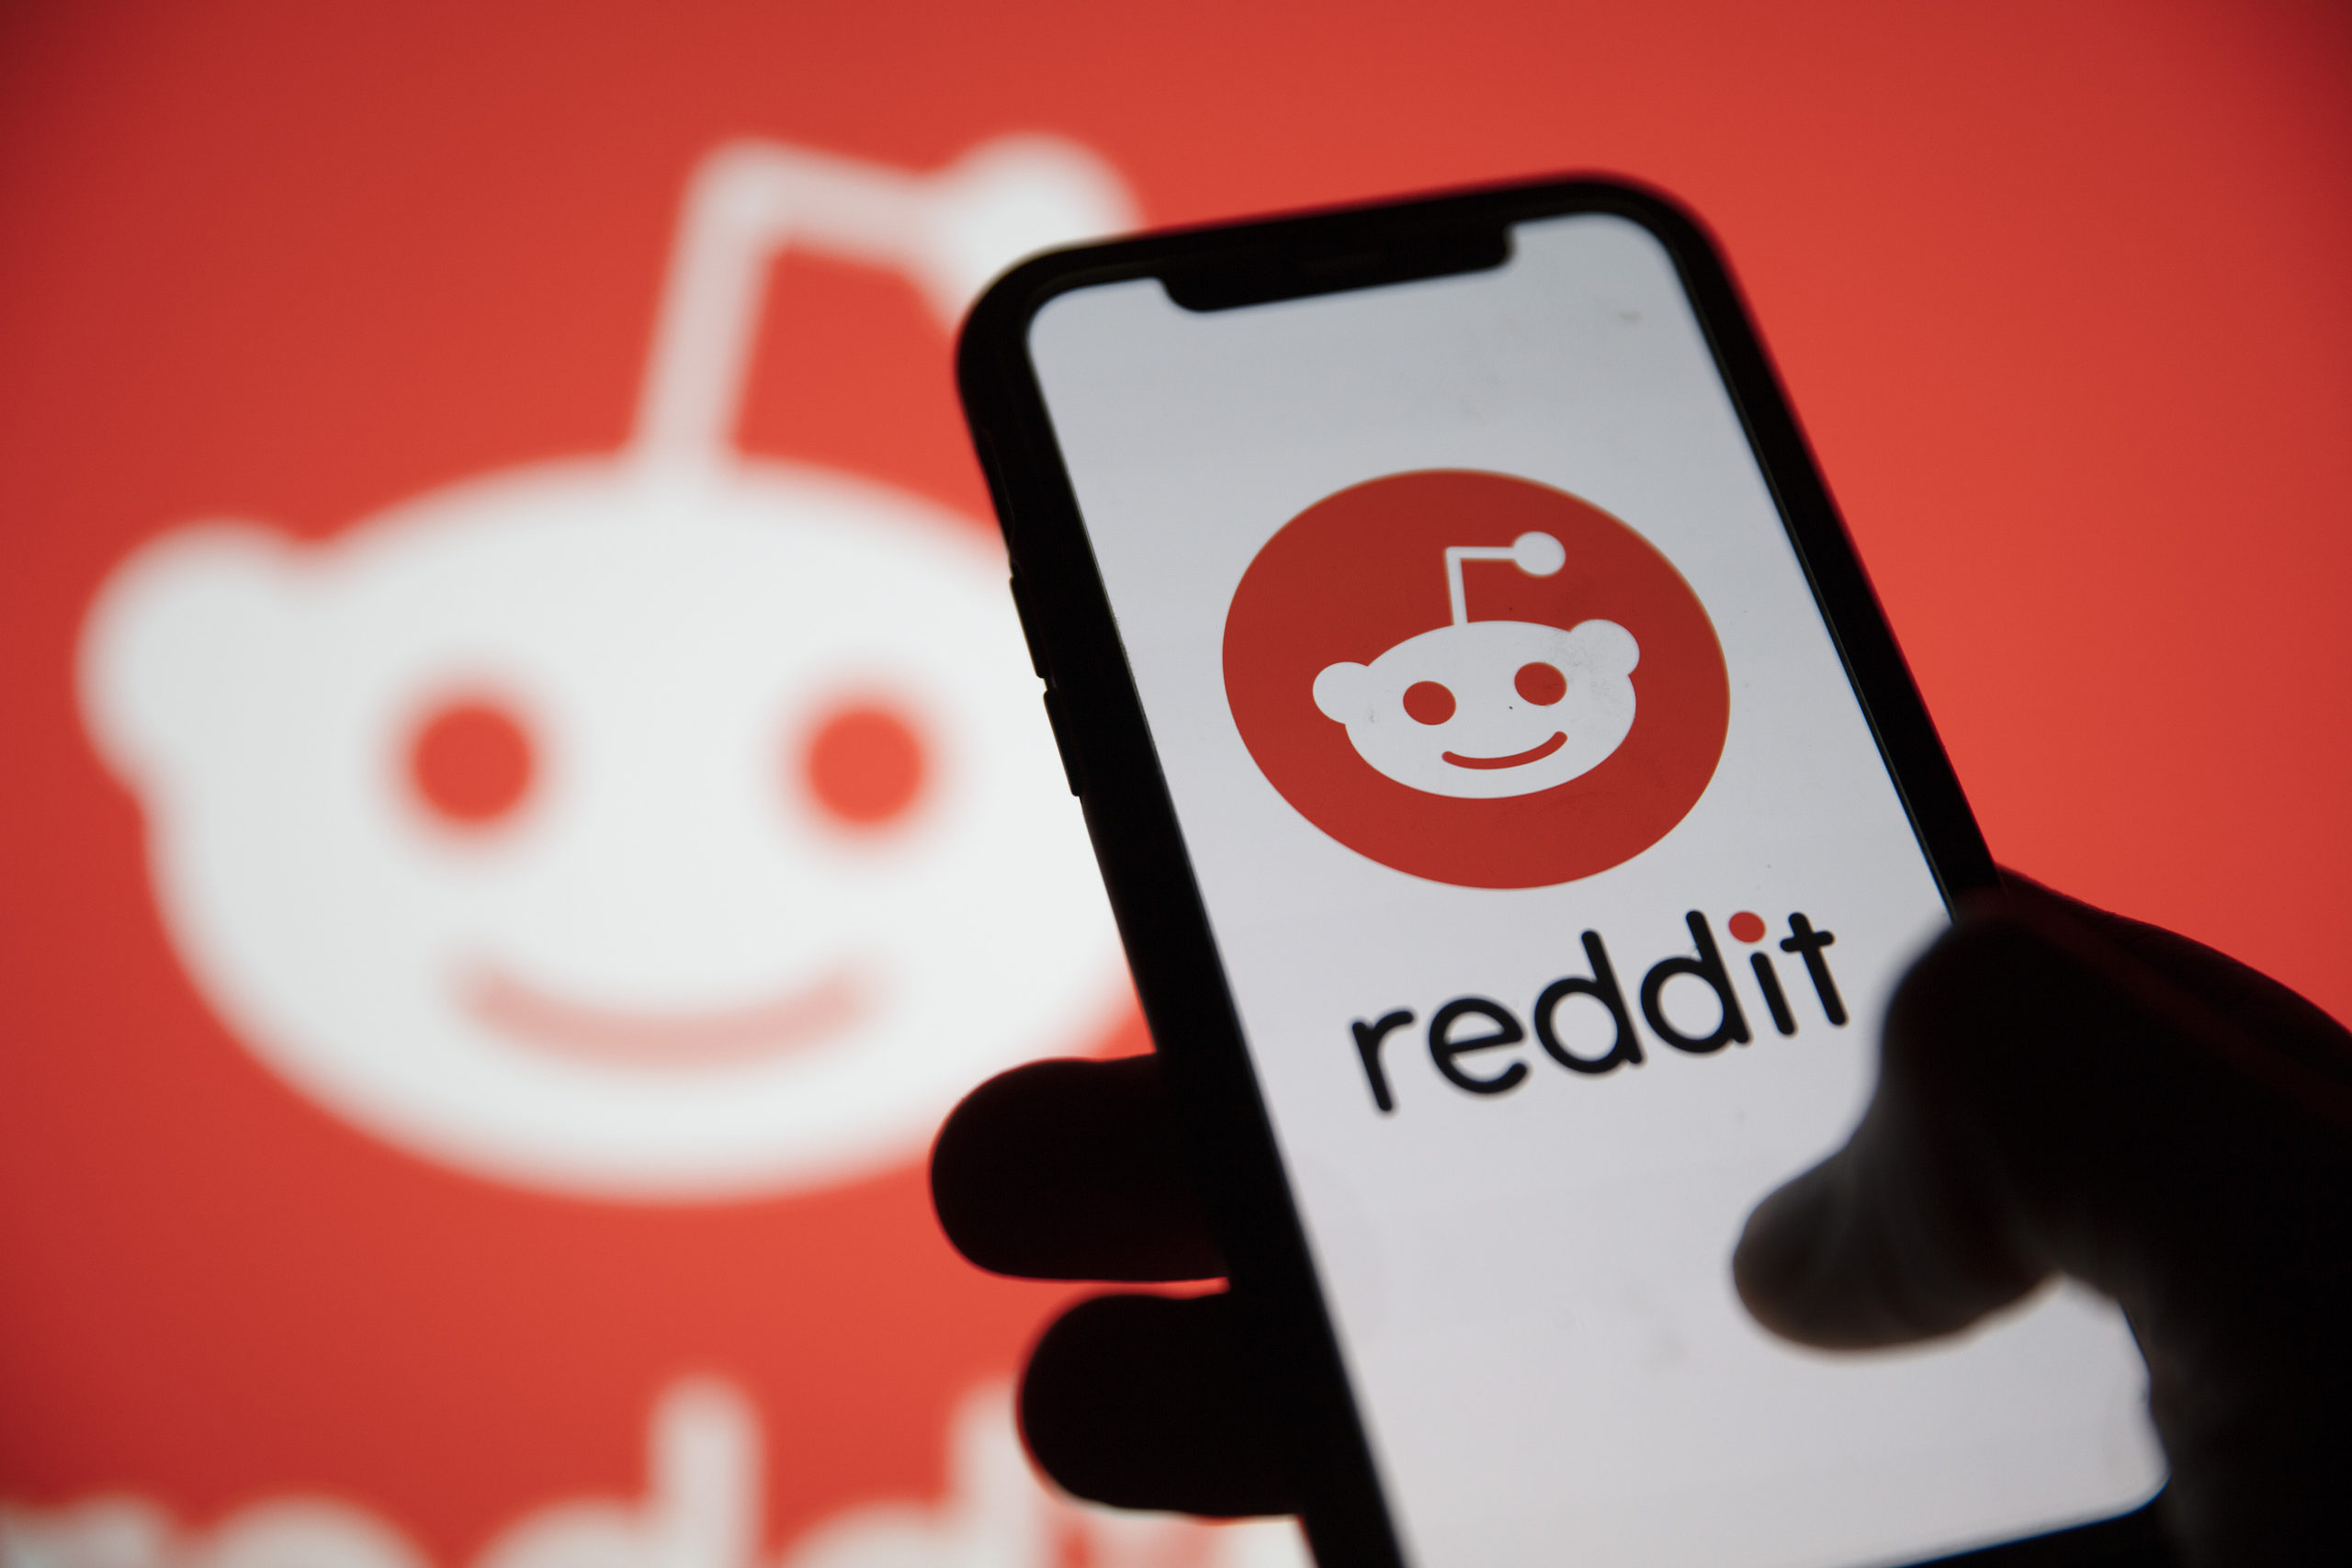 Reddit logo on phone screen